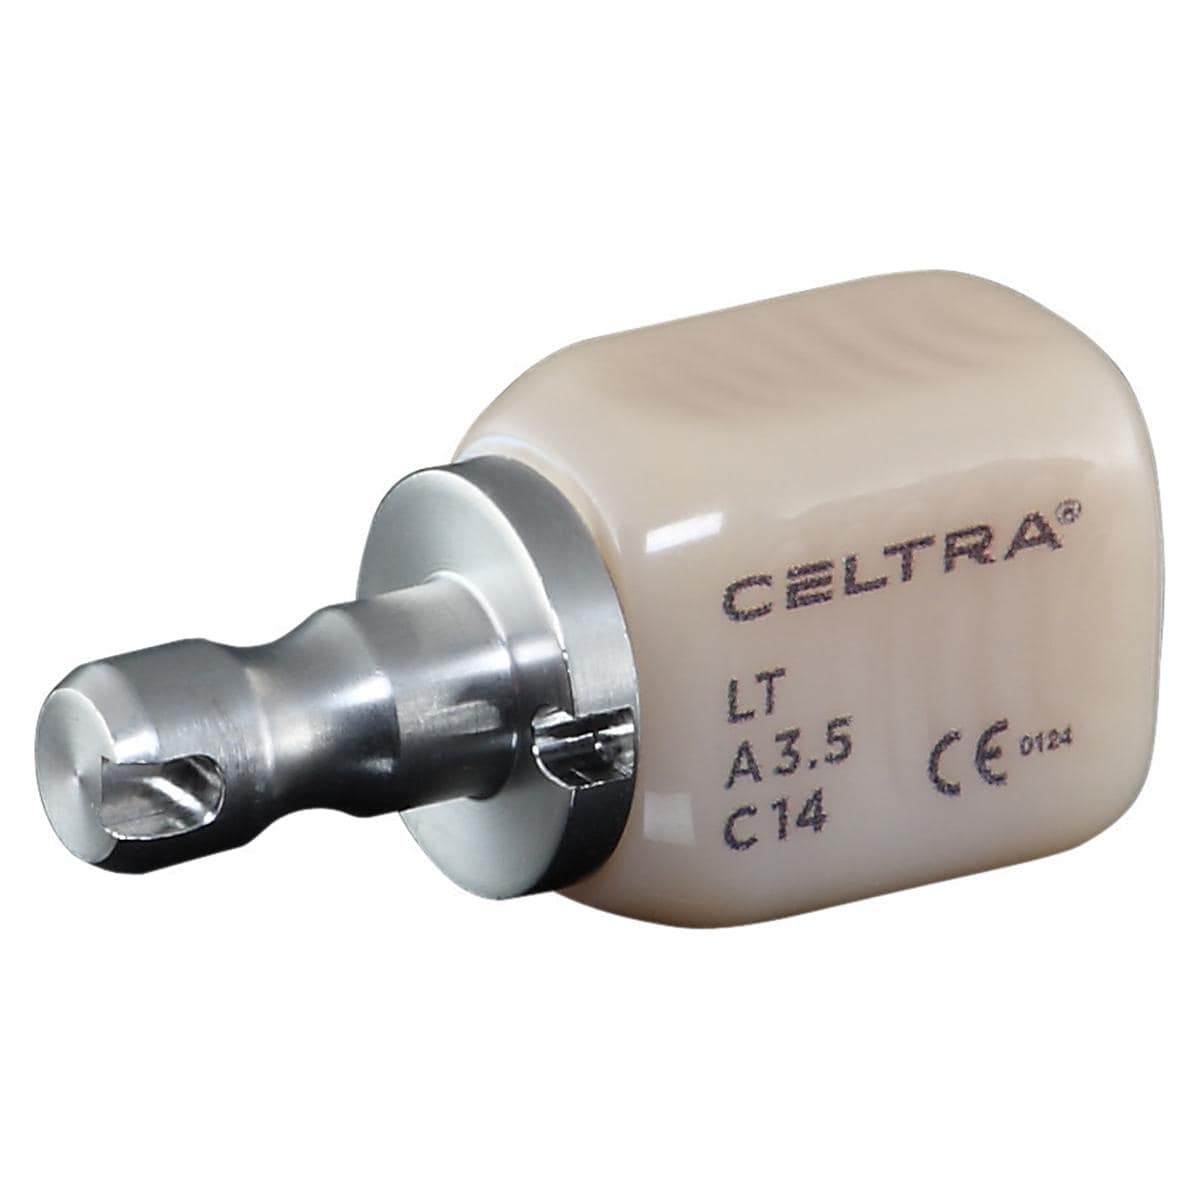 CELTRA® DUO LT - Nachfüllpackung - A3.5, Größe C14, Packung 4 Stück